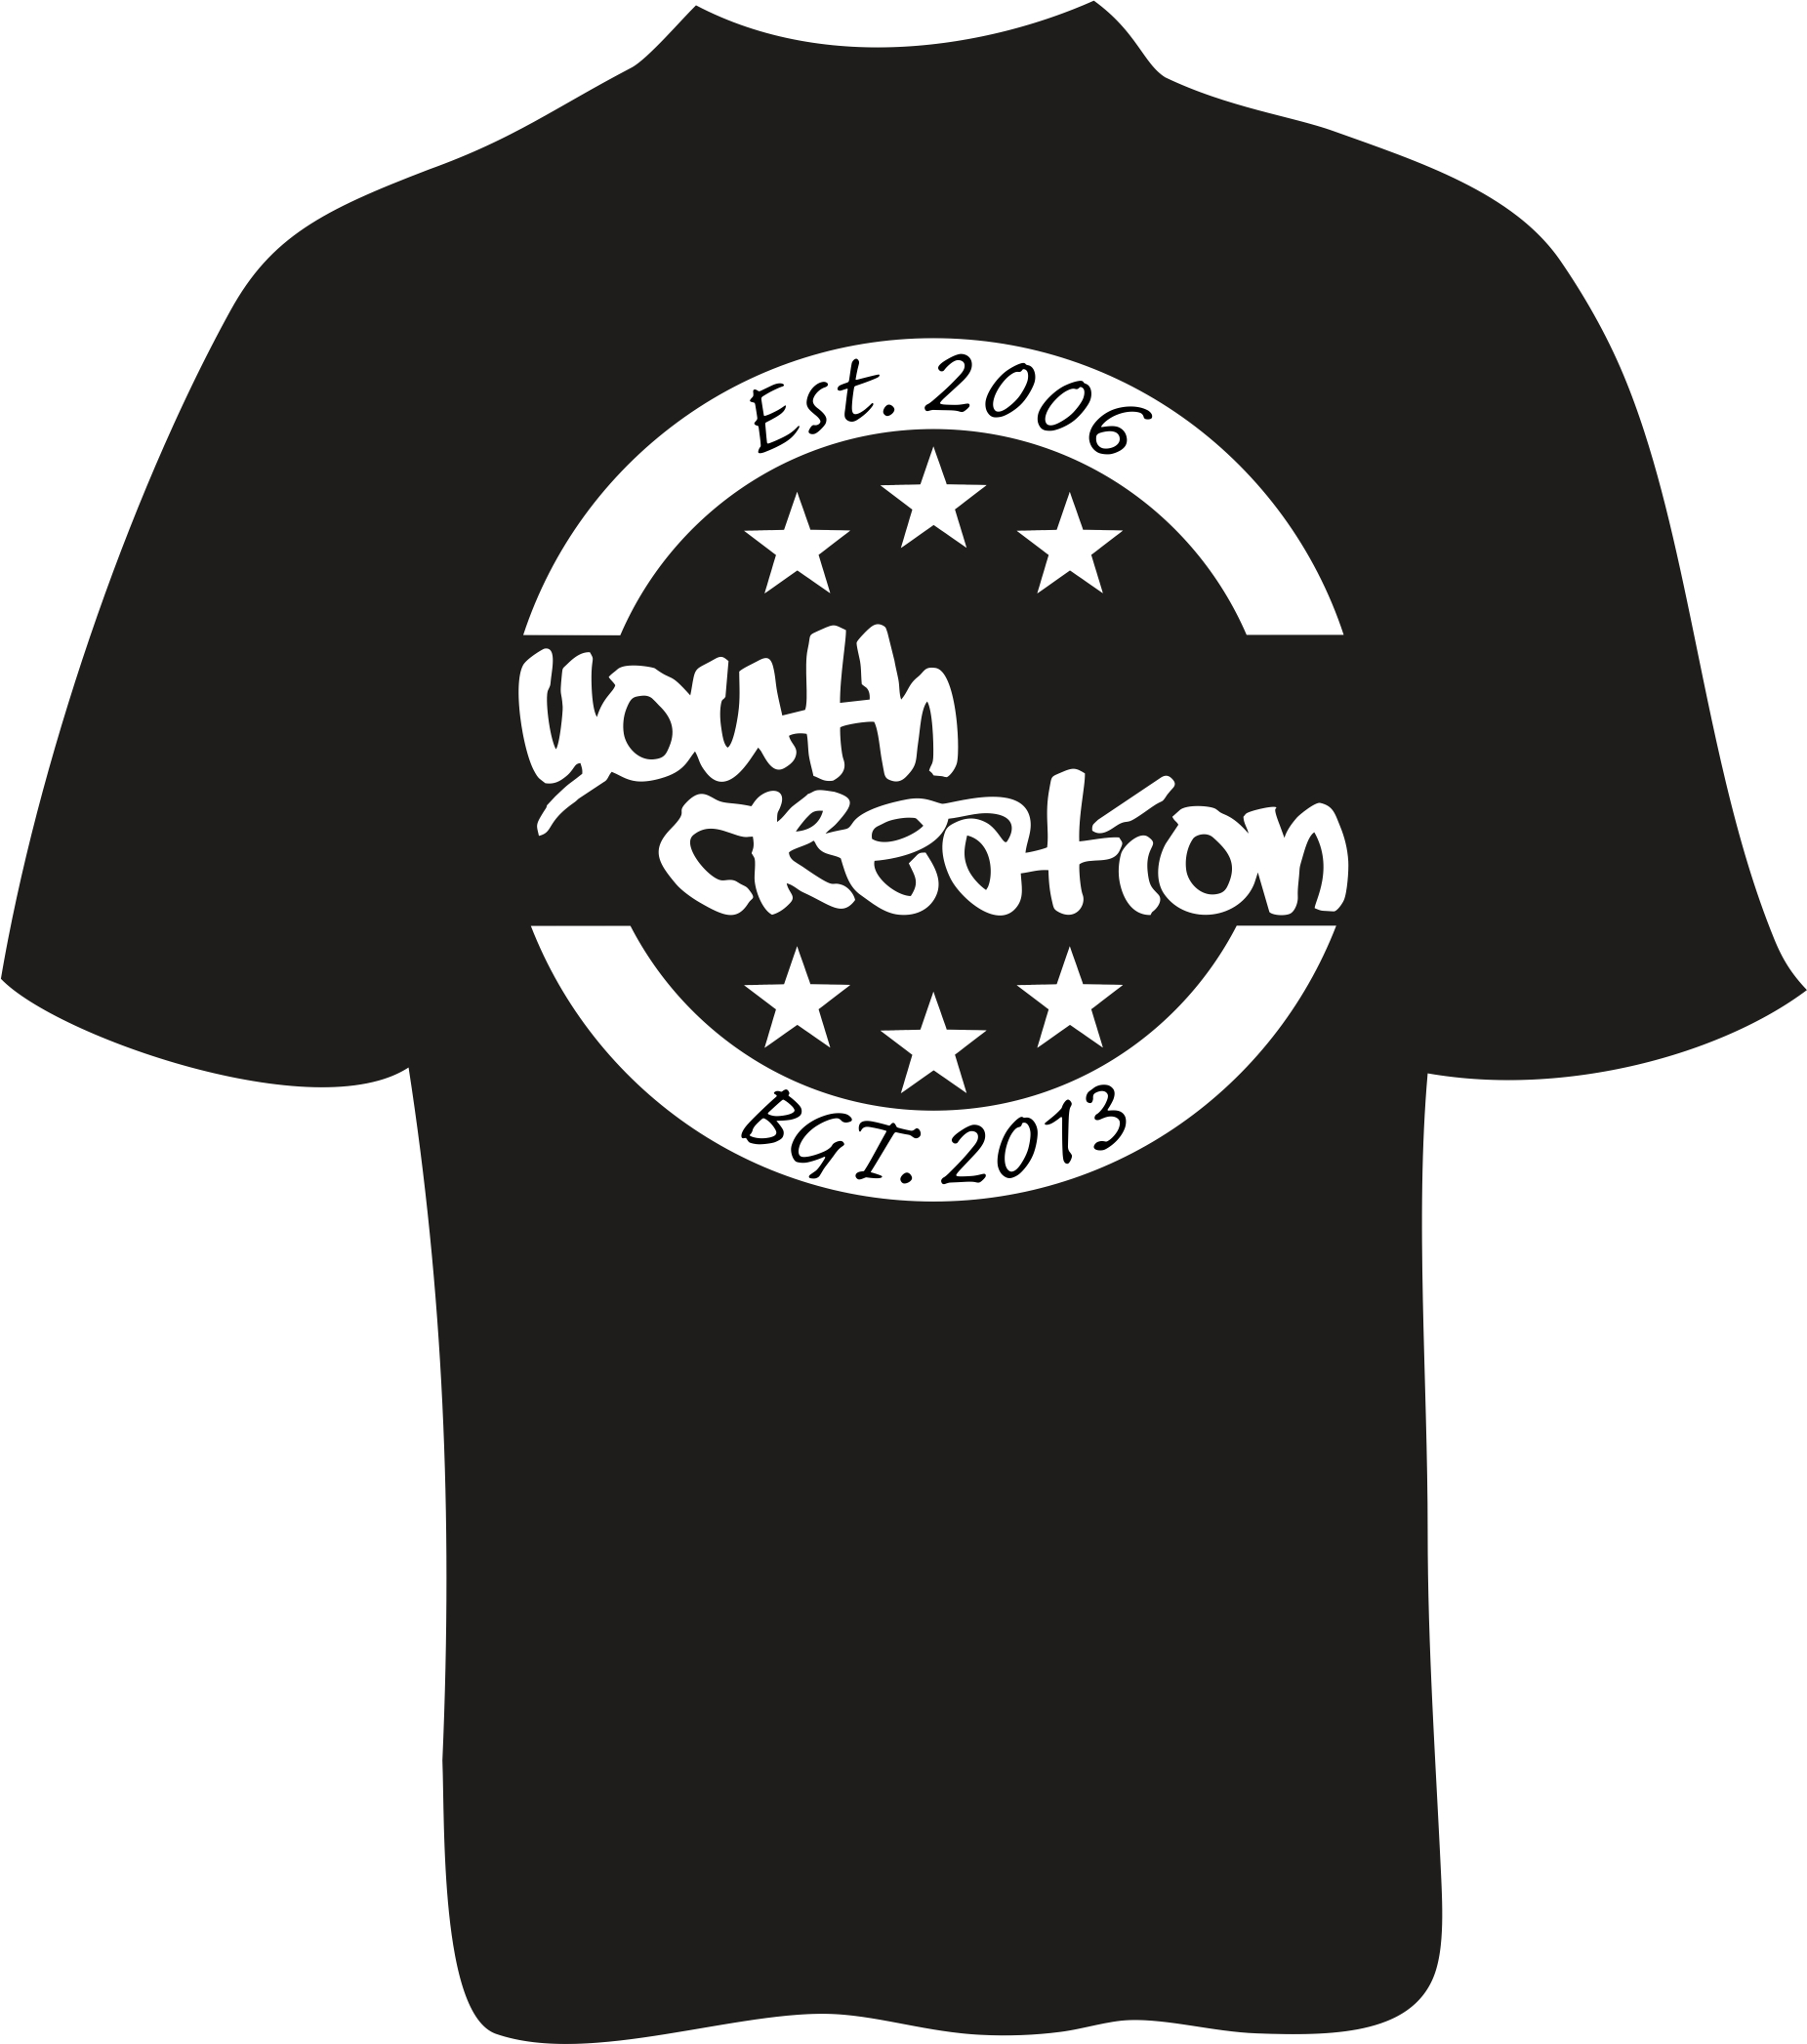 Youth Creation Adult Tee Shirt